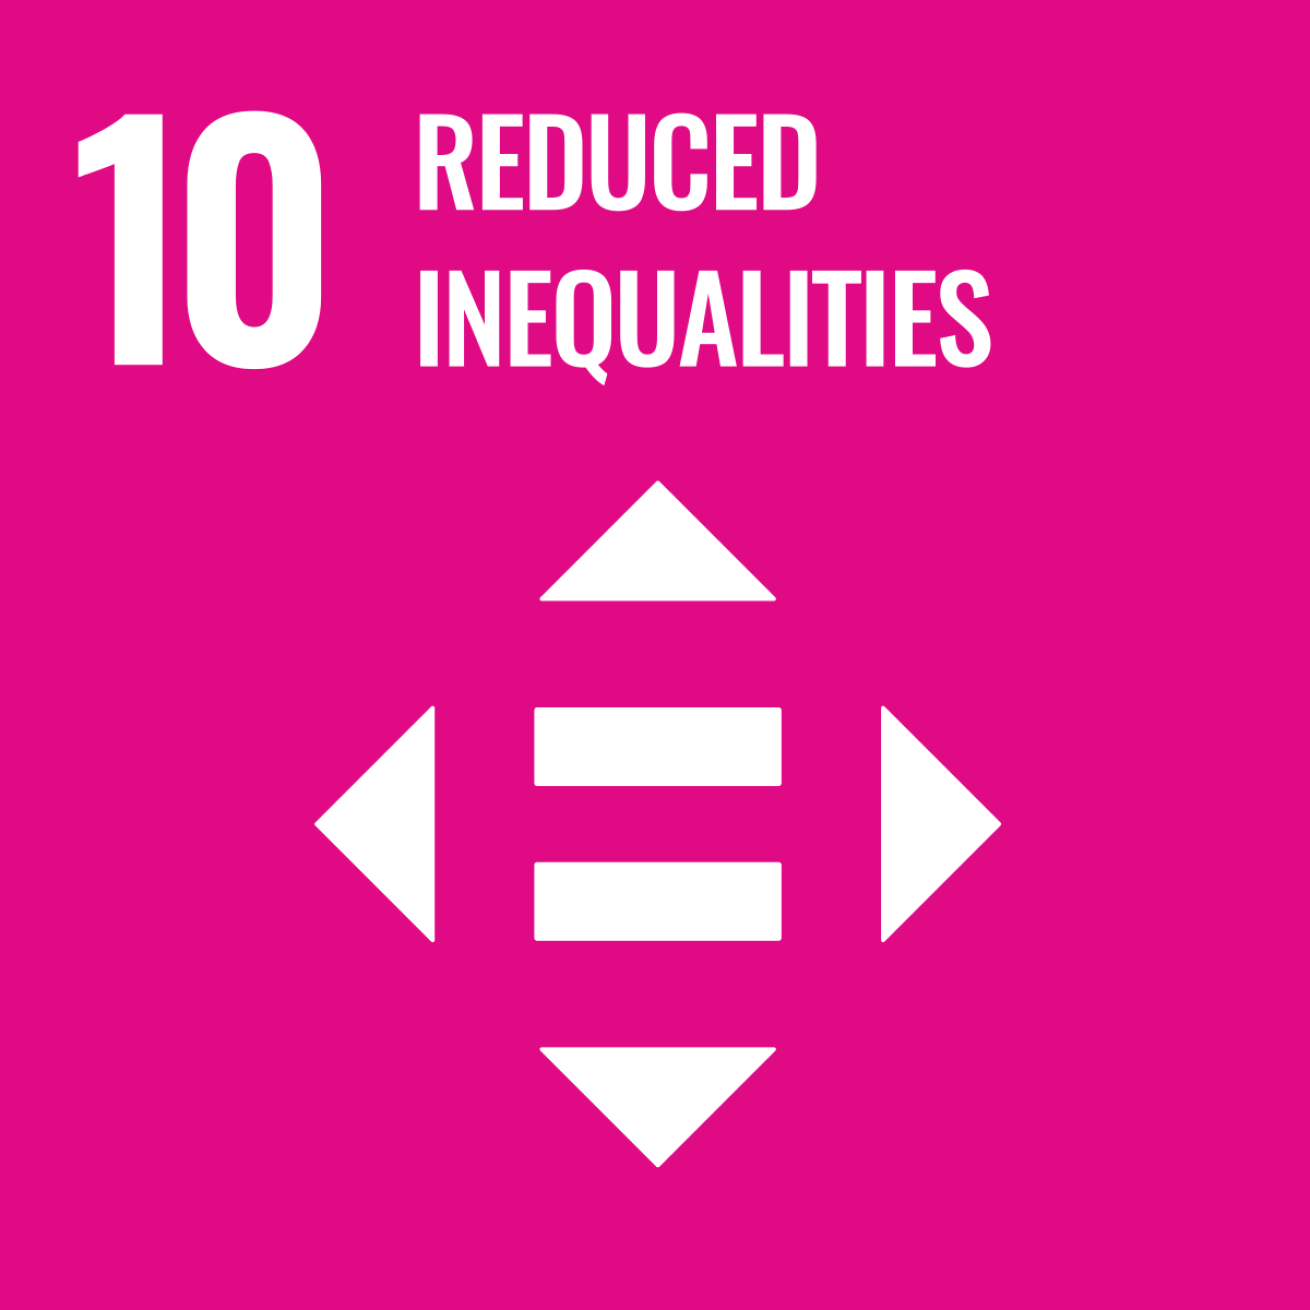 UN SGD 10 - Reduced inequalities